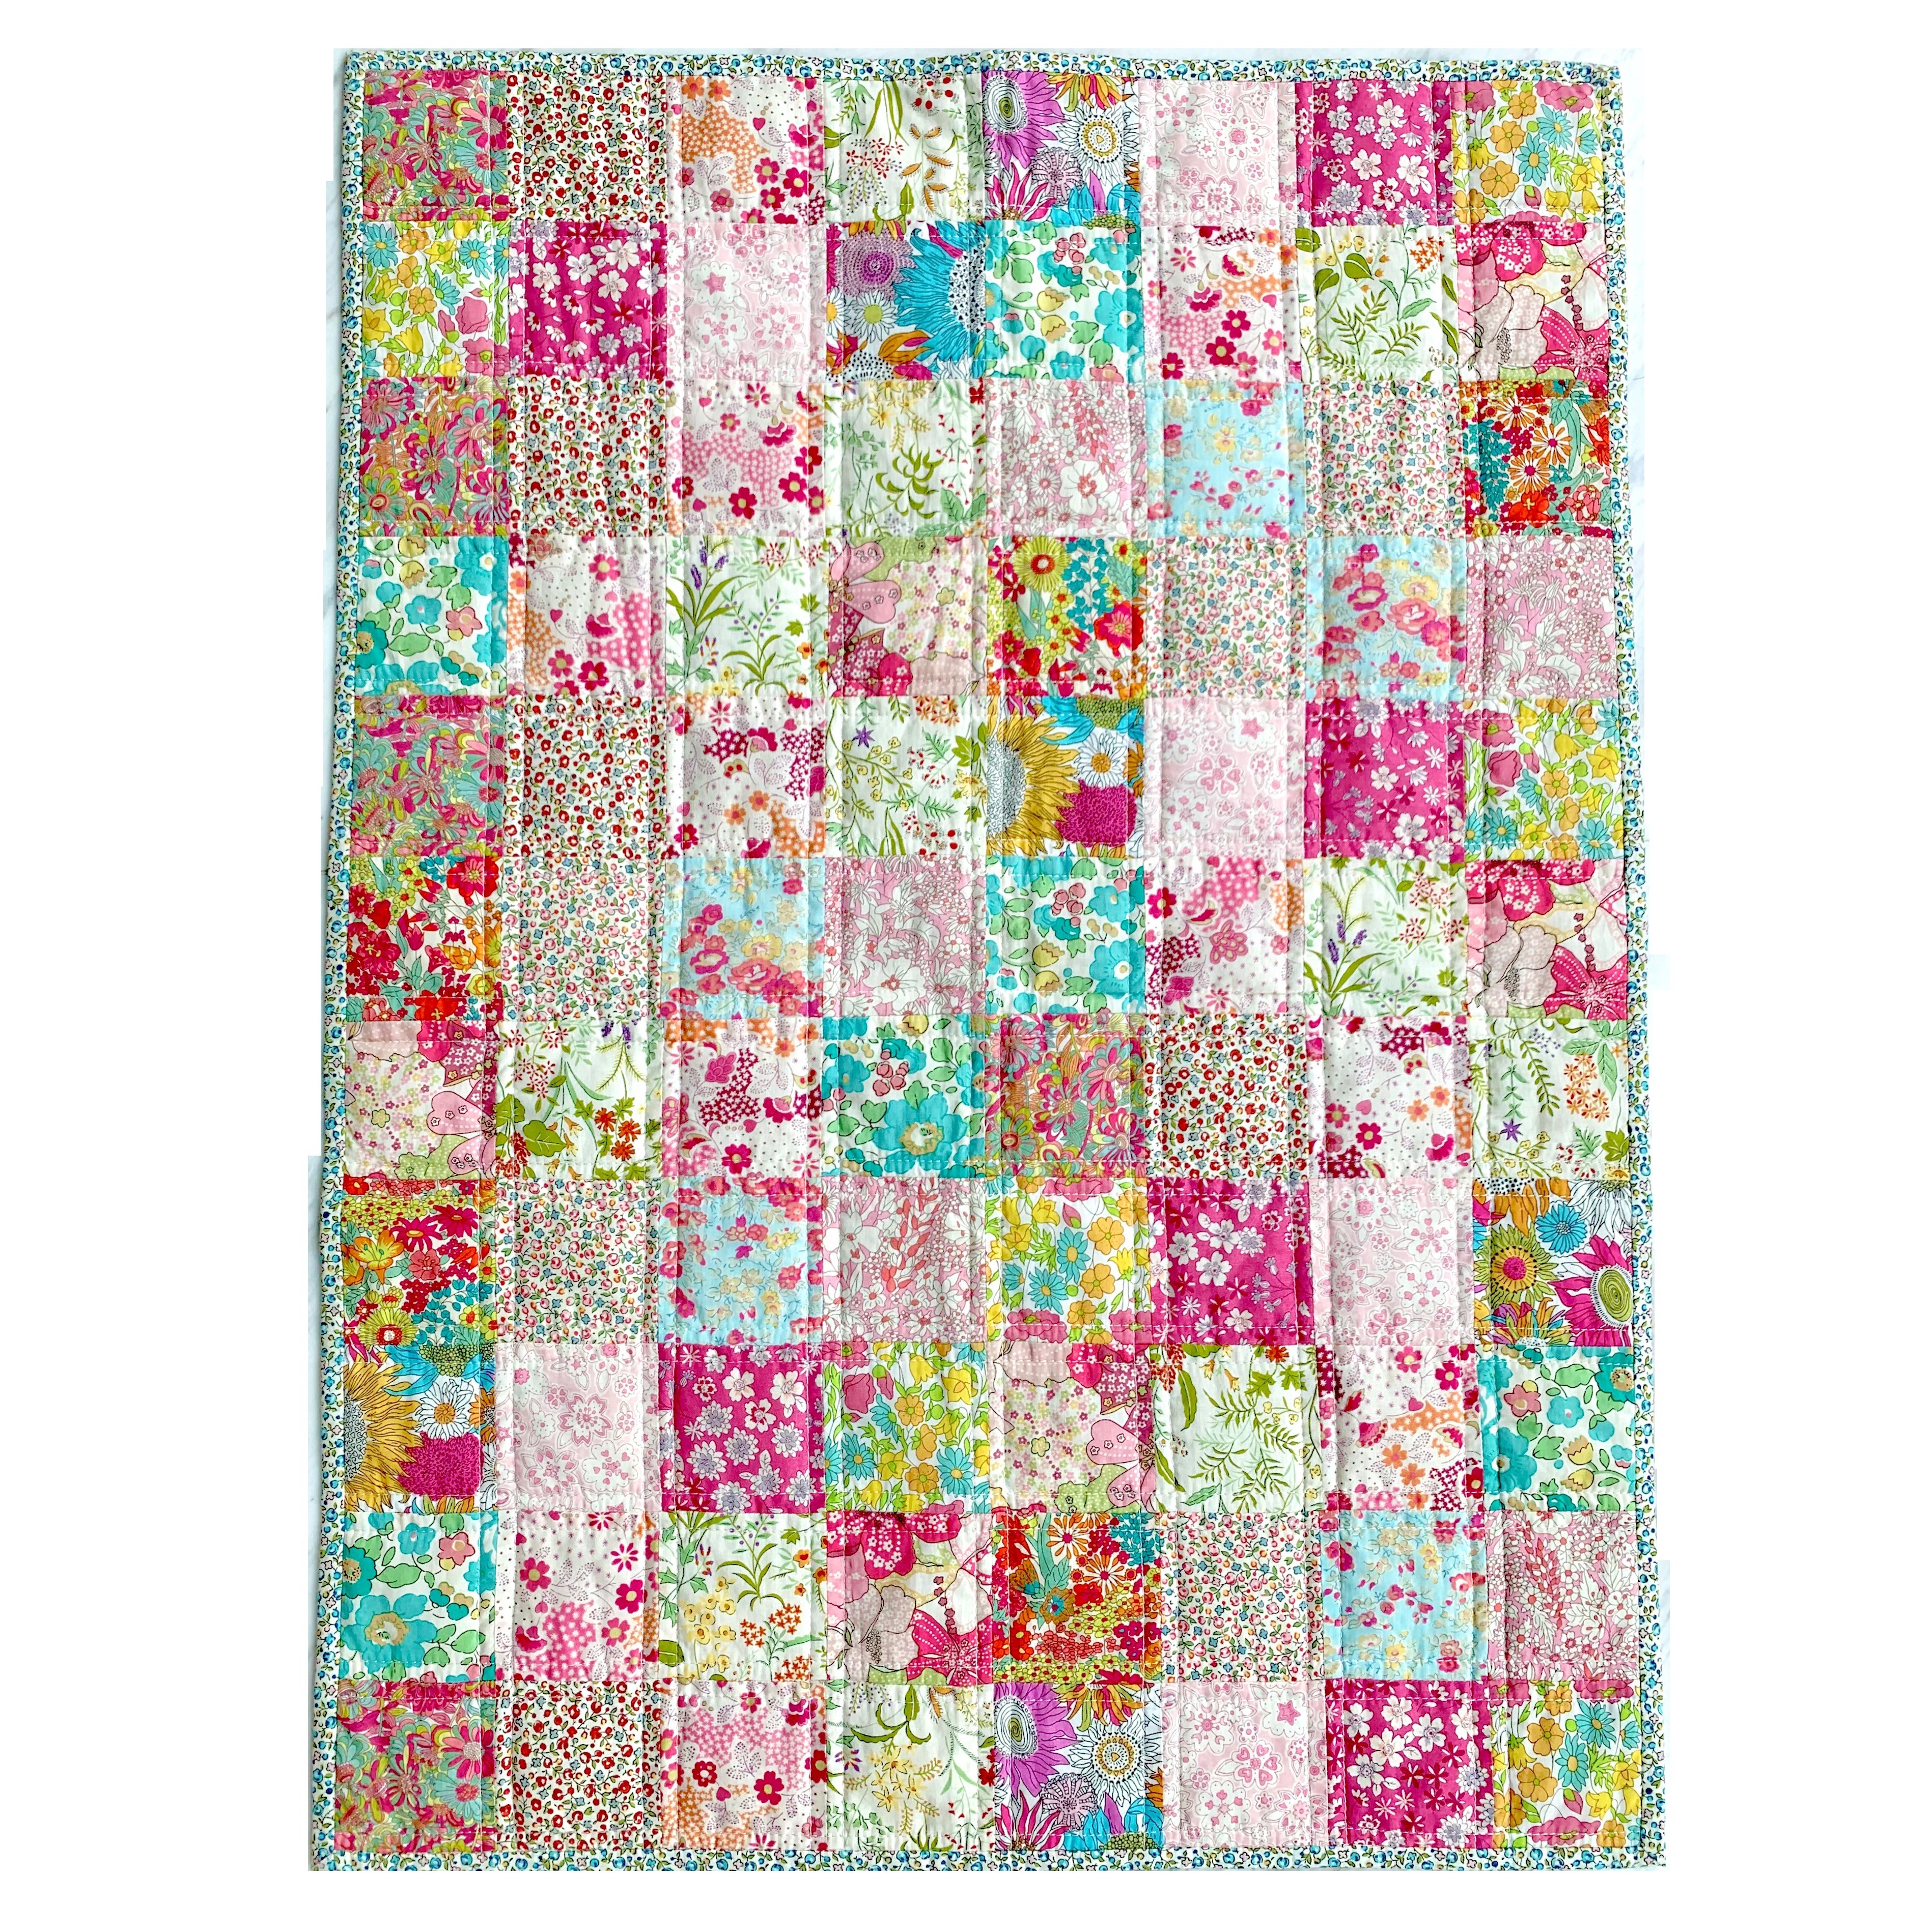 Domino patchwork quilt pdf pattern, making a quilt, modern quilt fabrics, modern quilt designs, simple quilt block, Tikki London